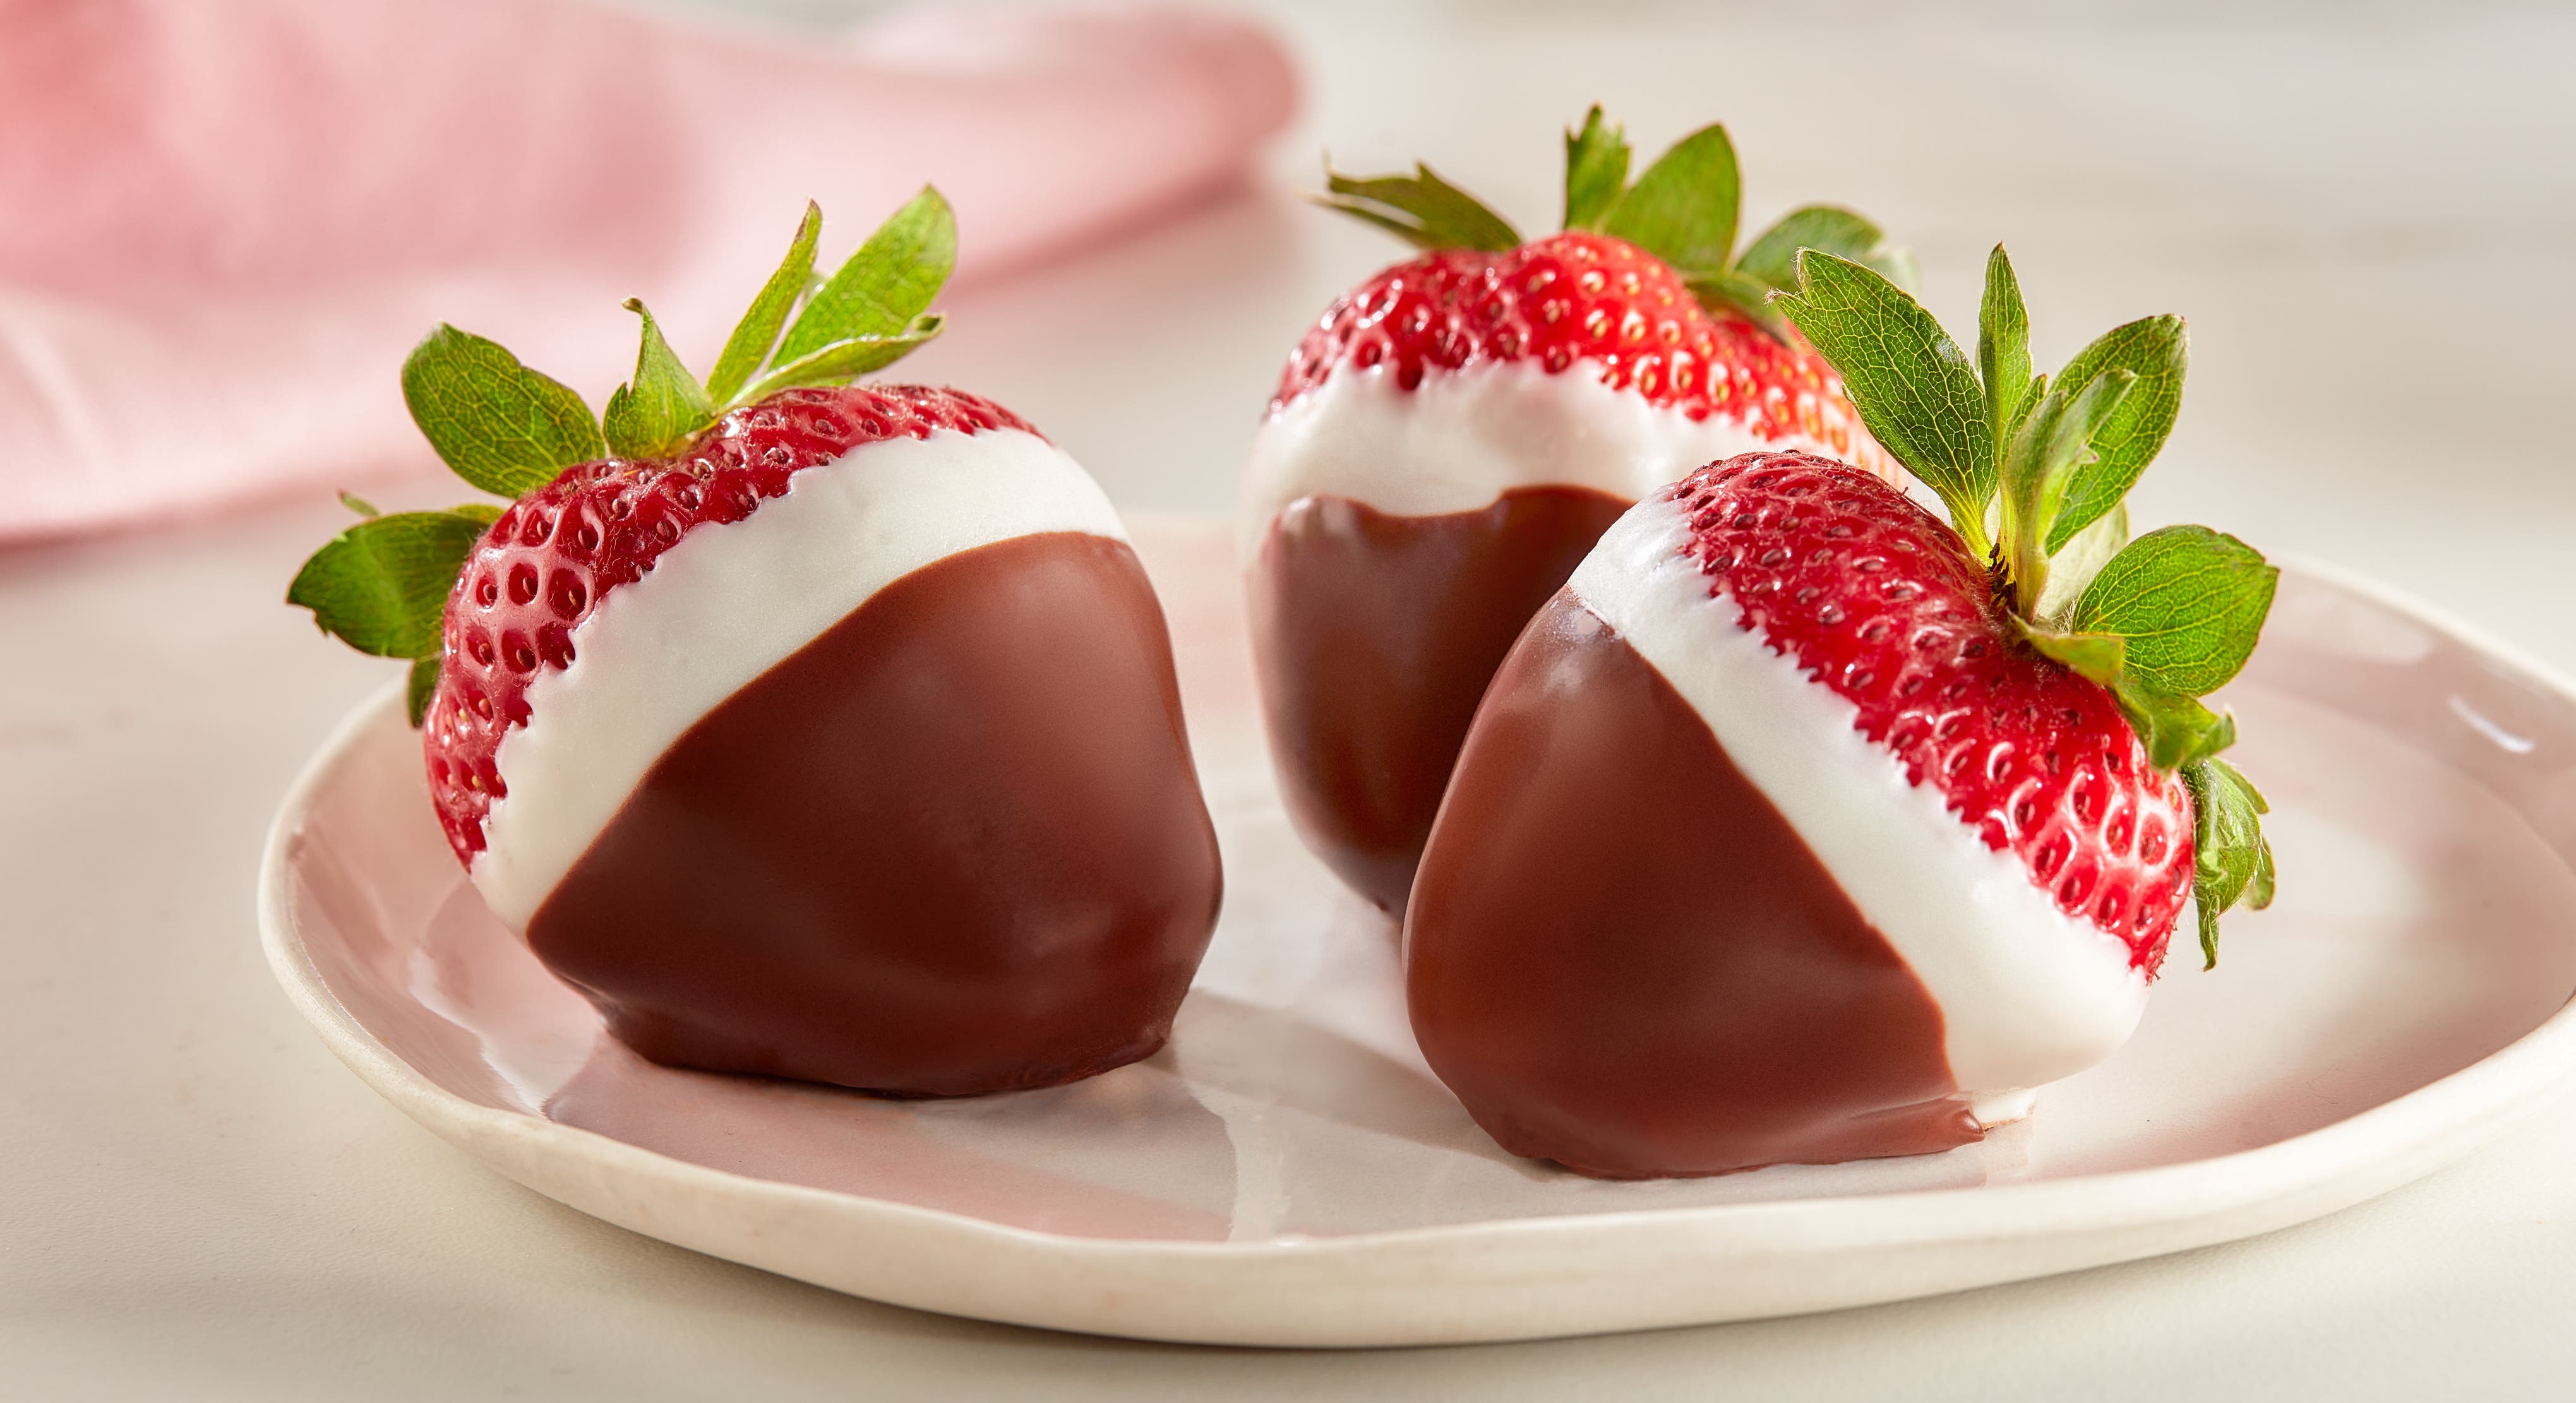 white and chocolate covered strawberries